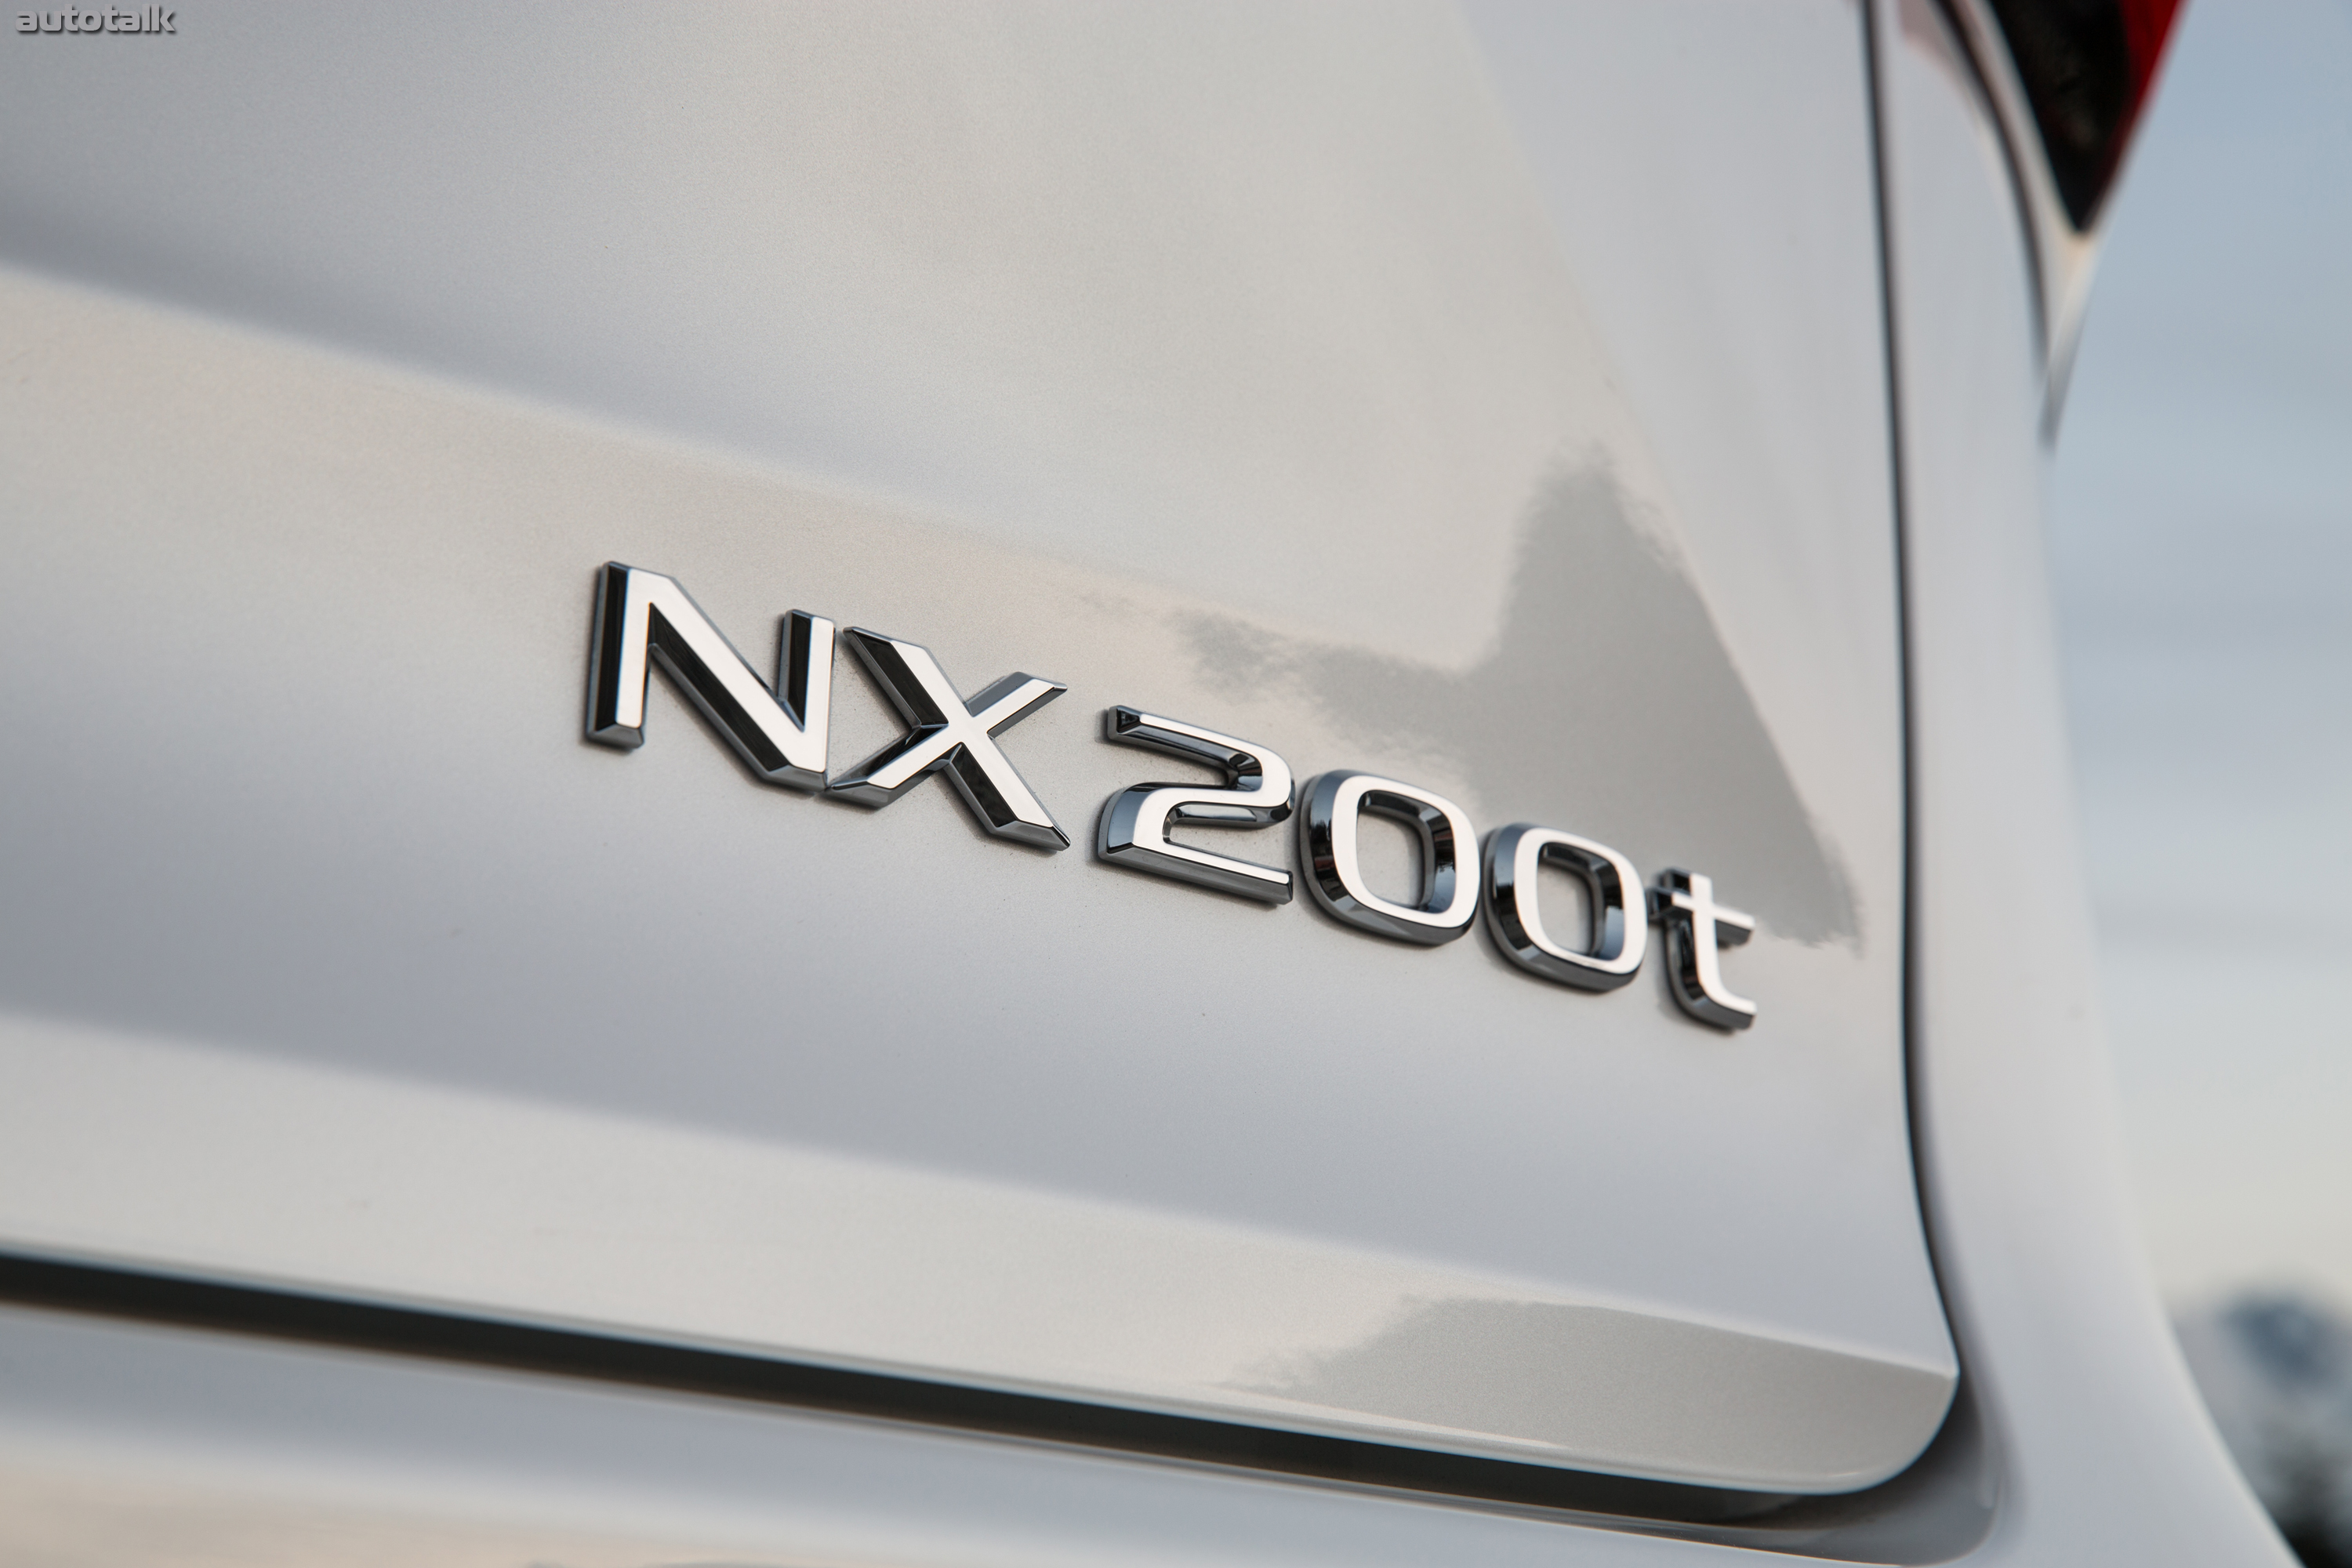 2015 Lexus NX 200t